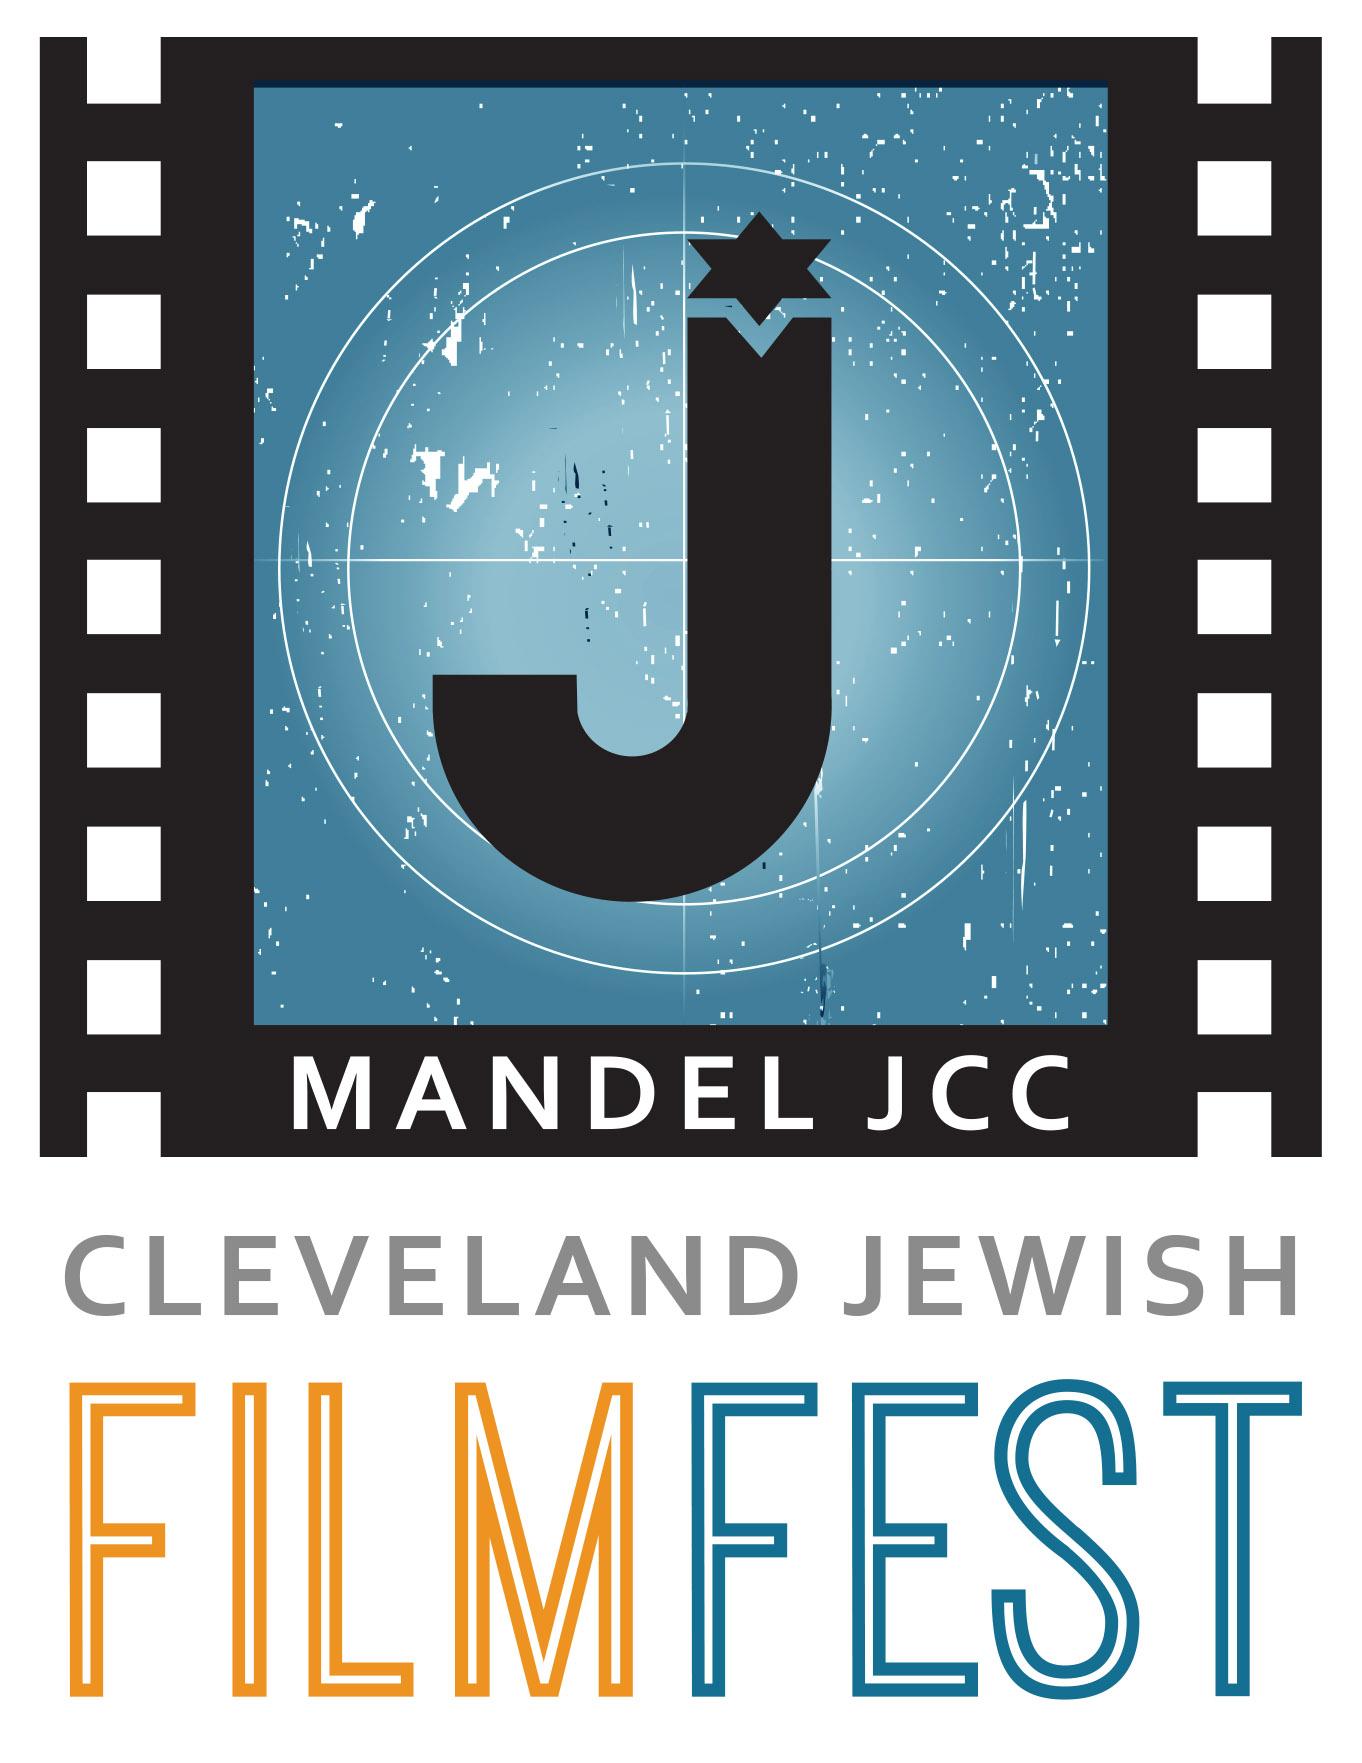 Mandel JCC Cleveland Jewish FilmFest